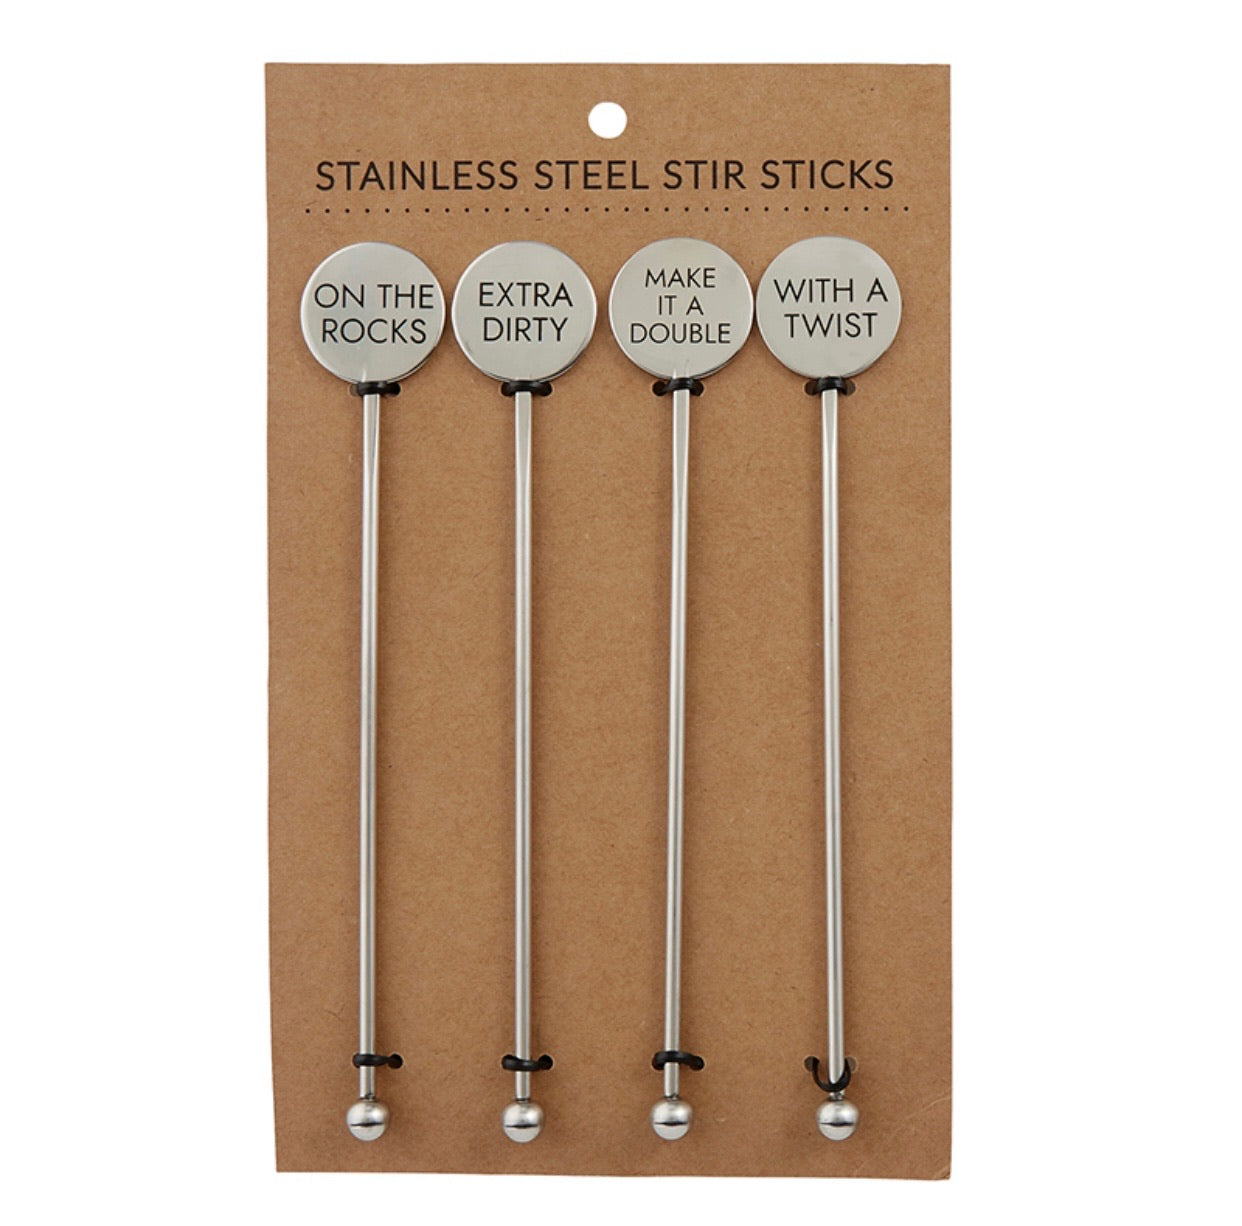 Stainless Steel Stir Sticks